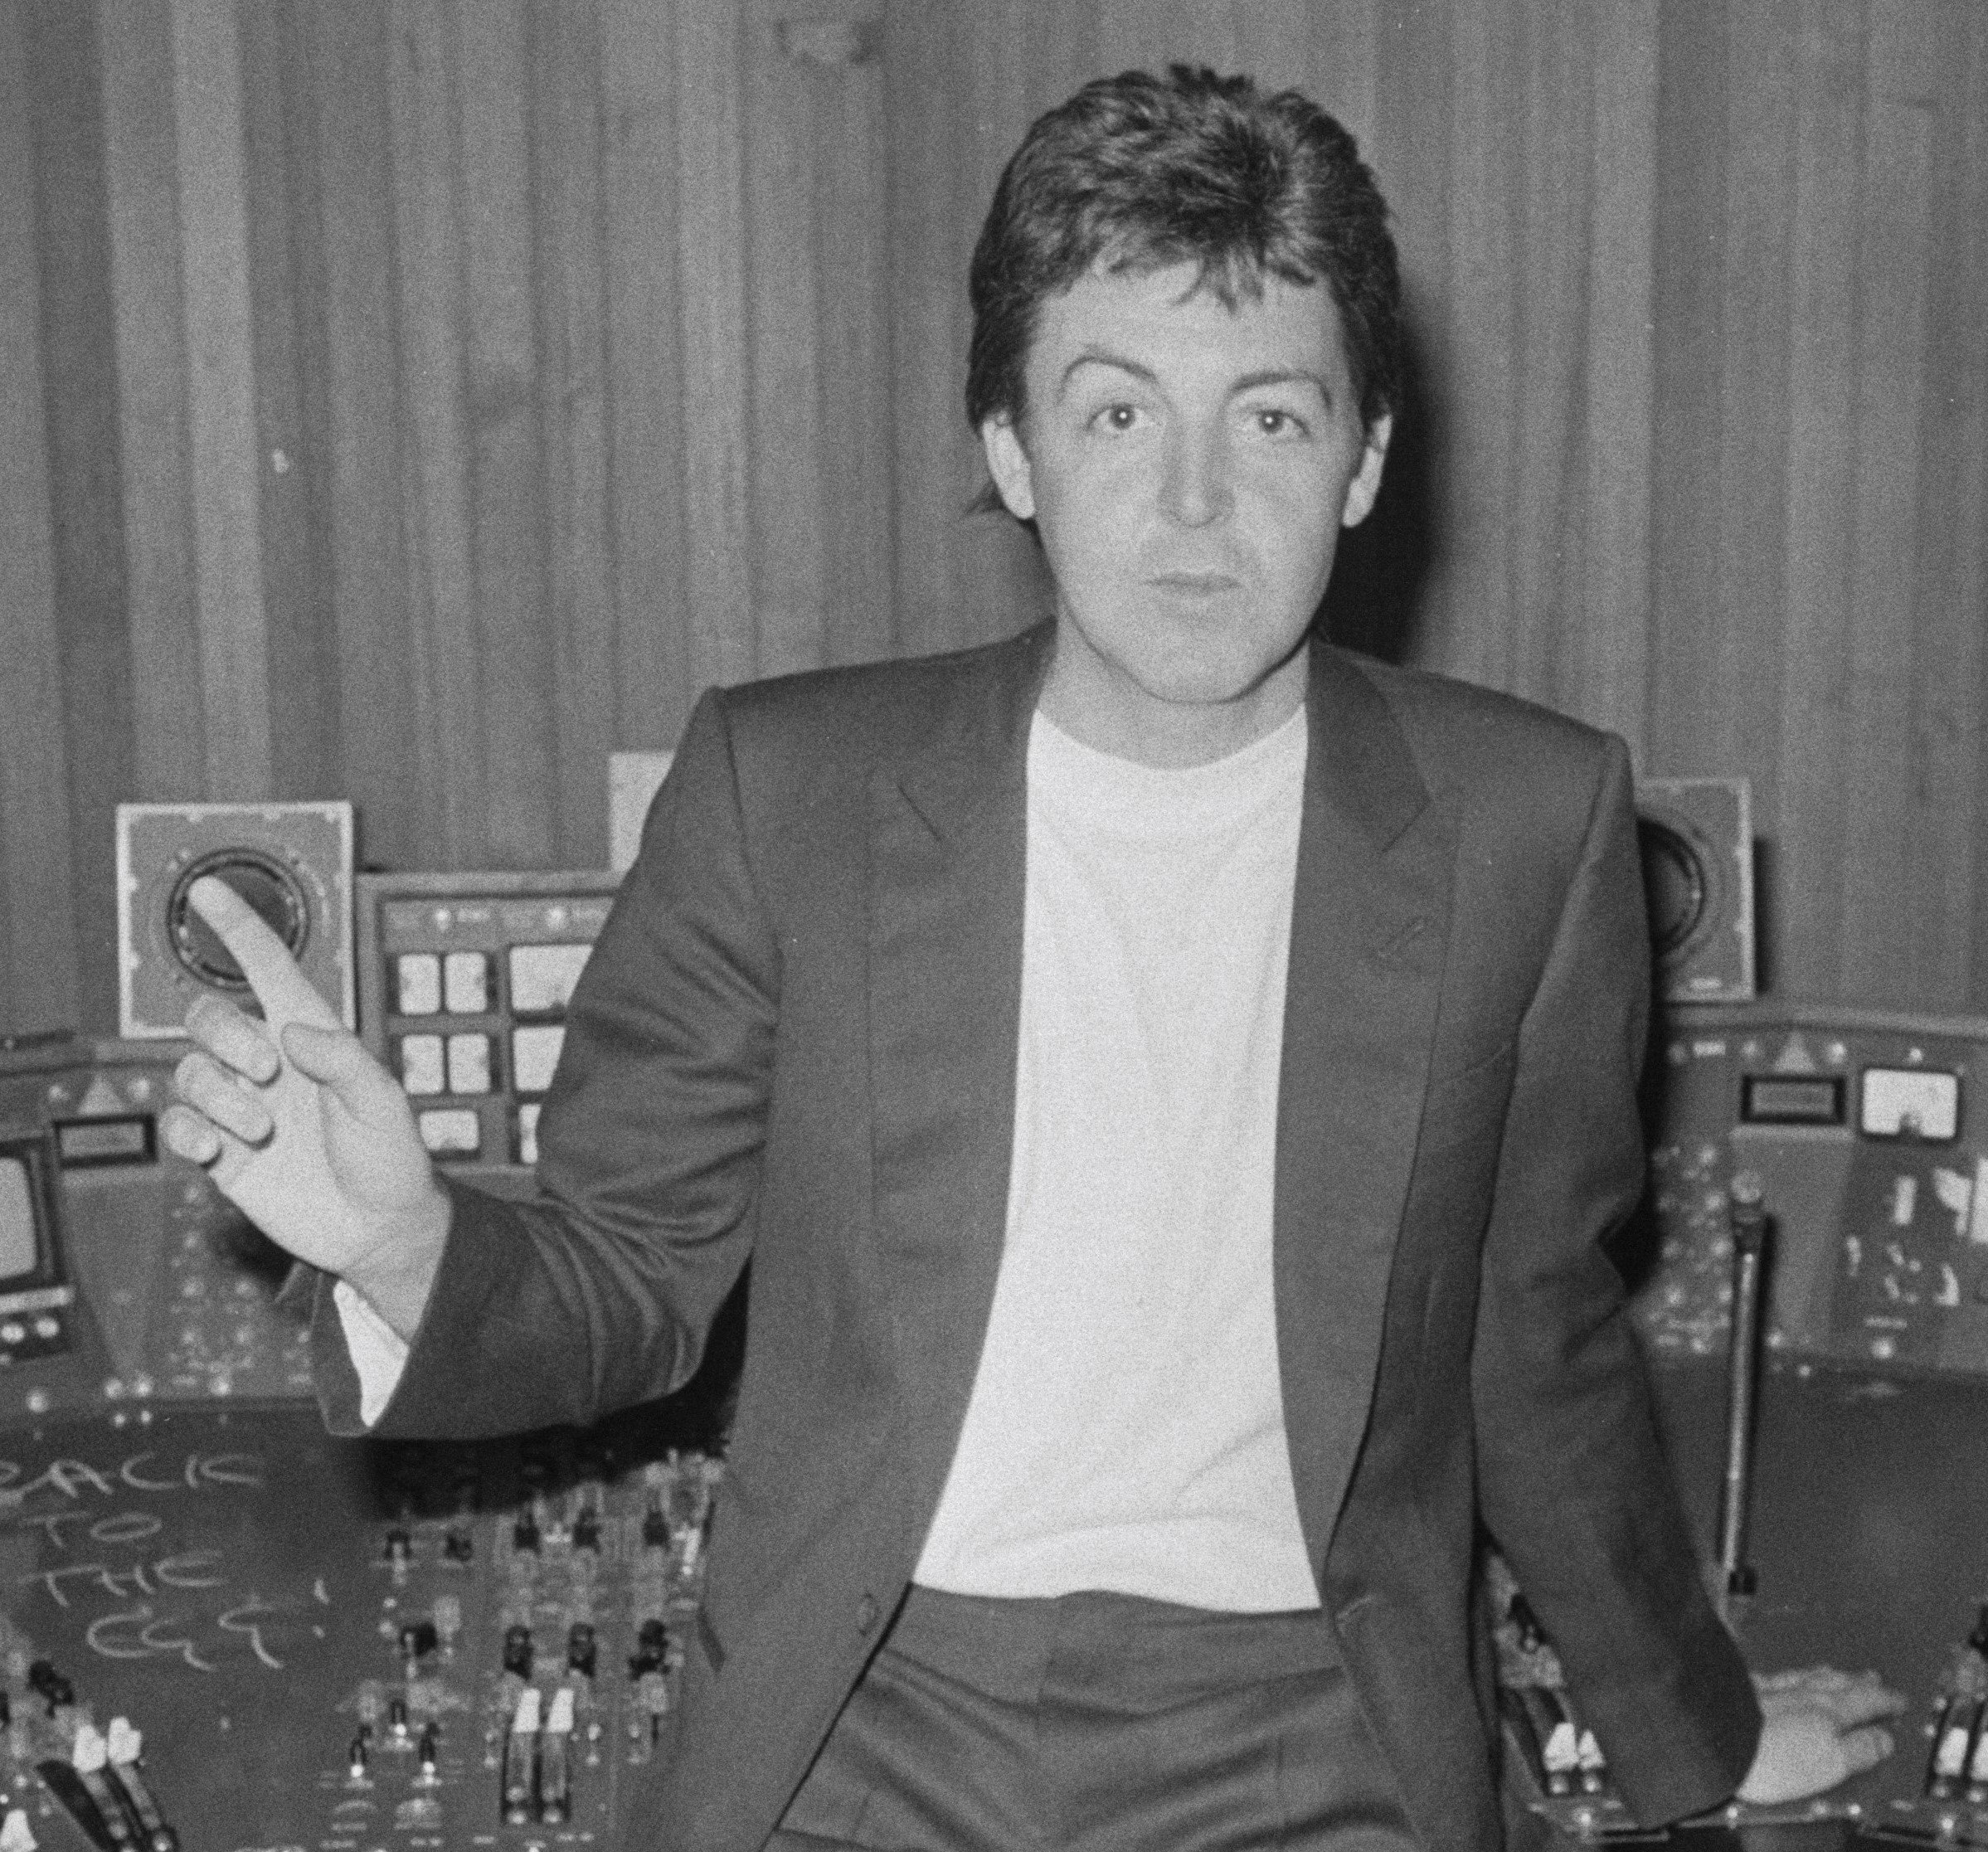 Paul McCartney raising a finger